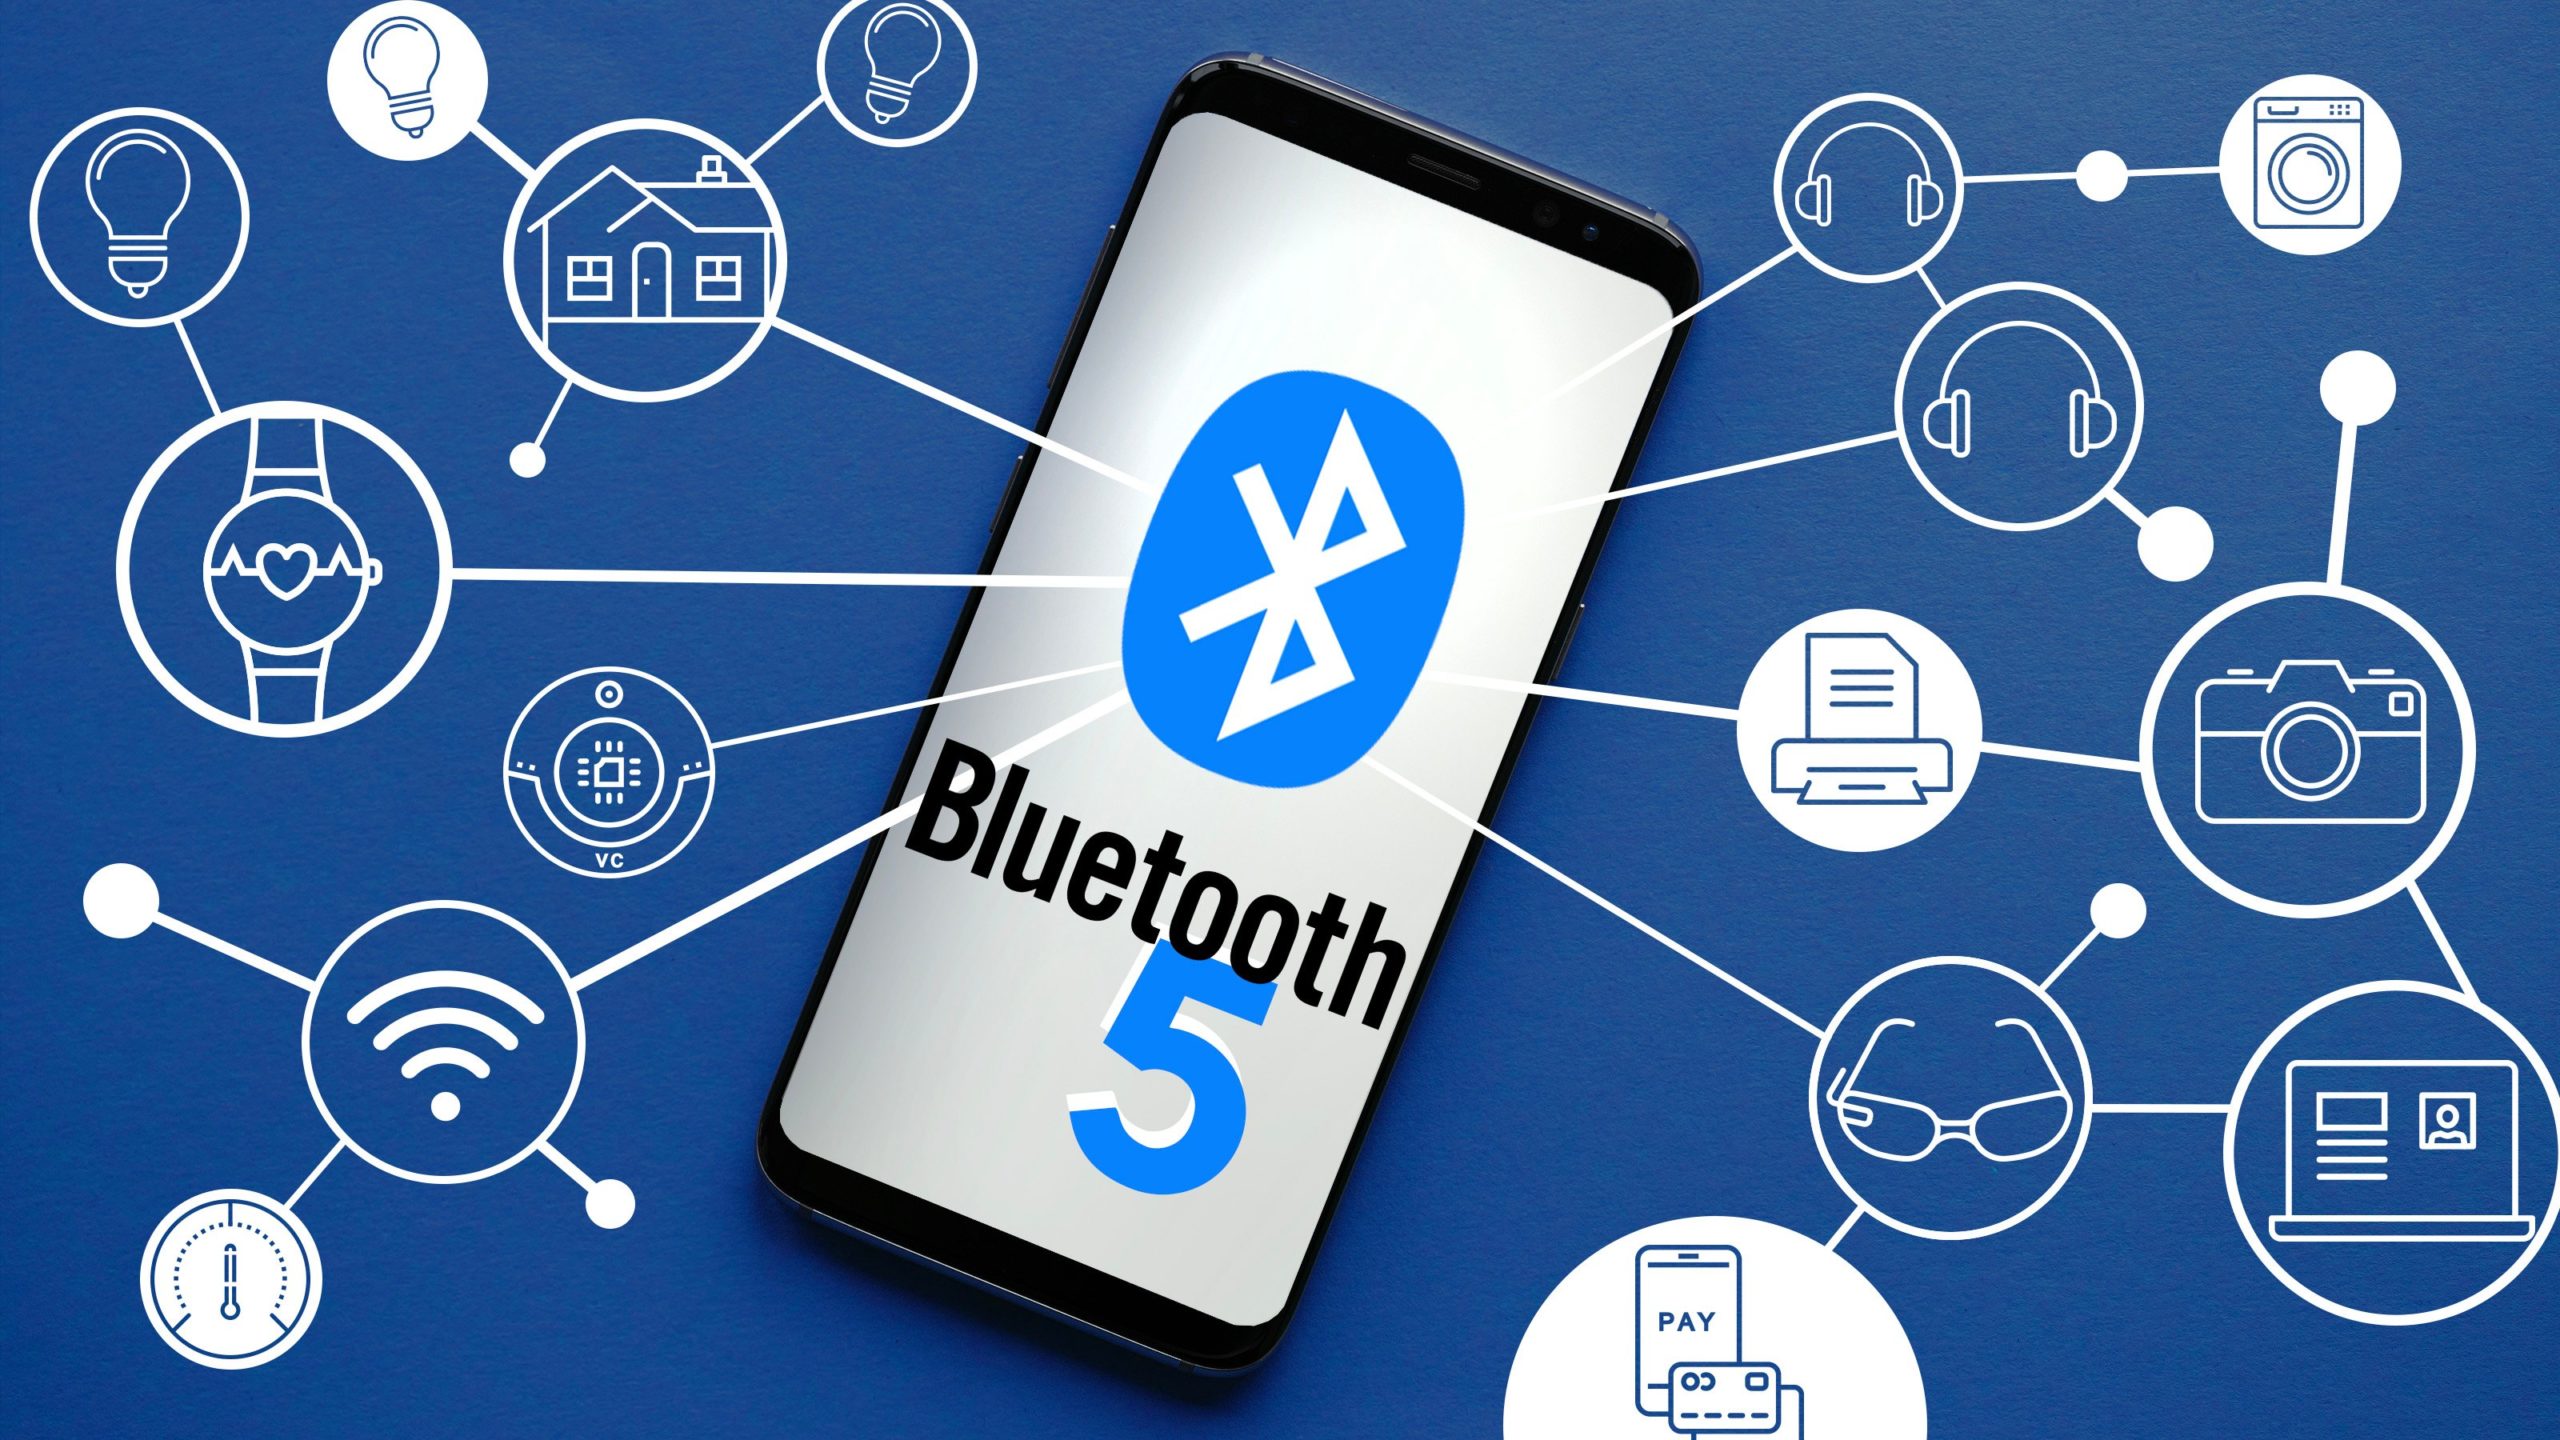 2.Bluetooth 5